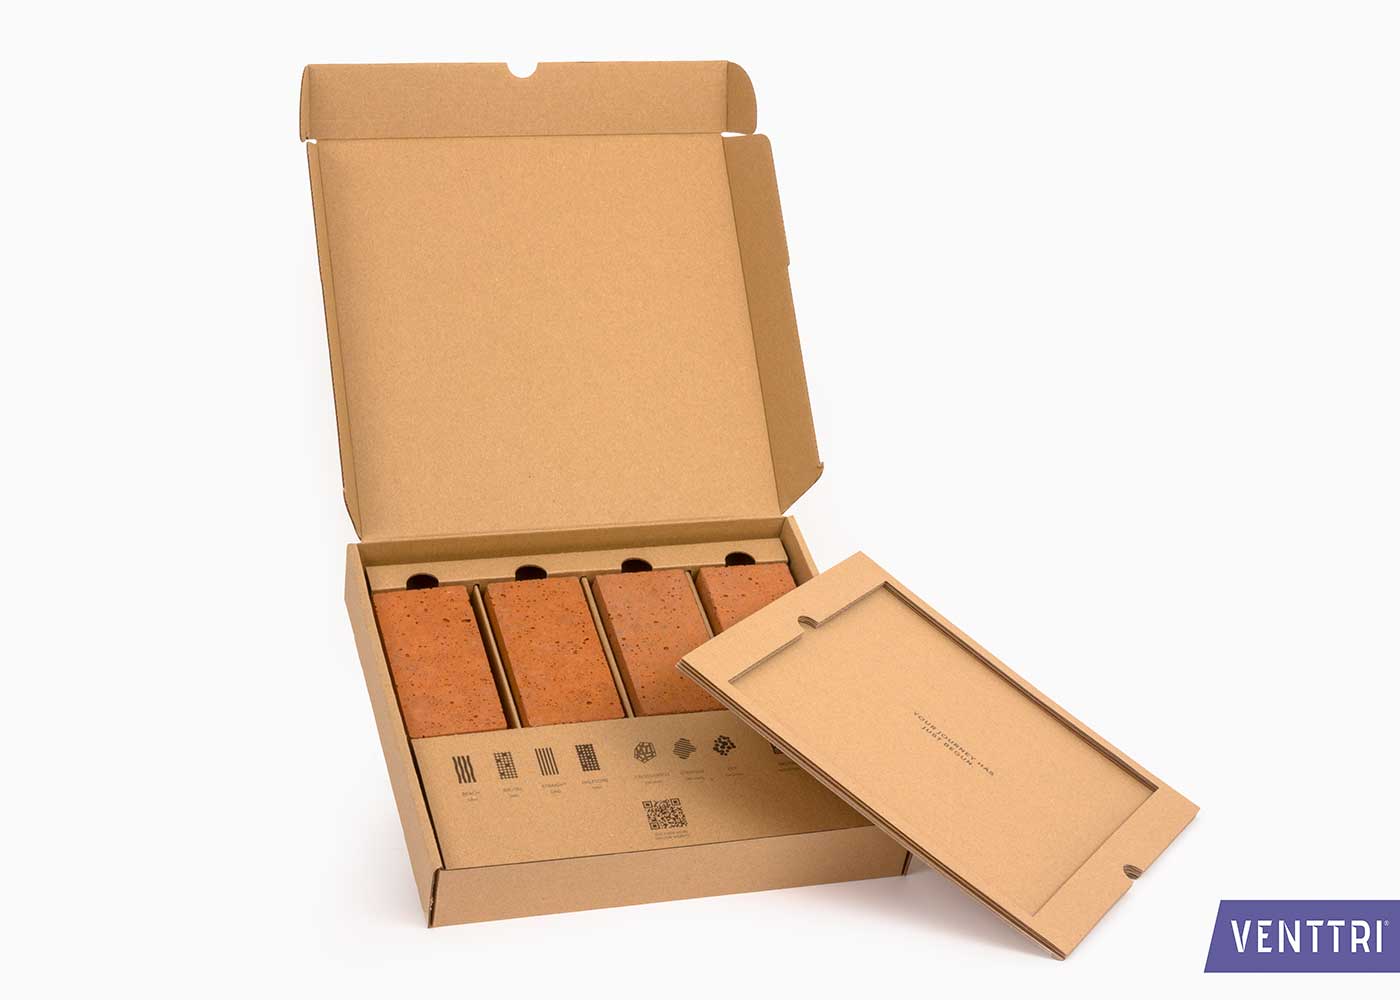 Custom folding box with compartmentalization